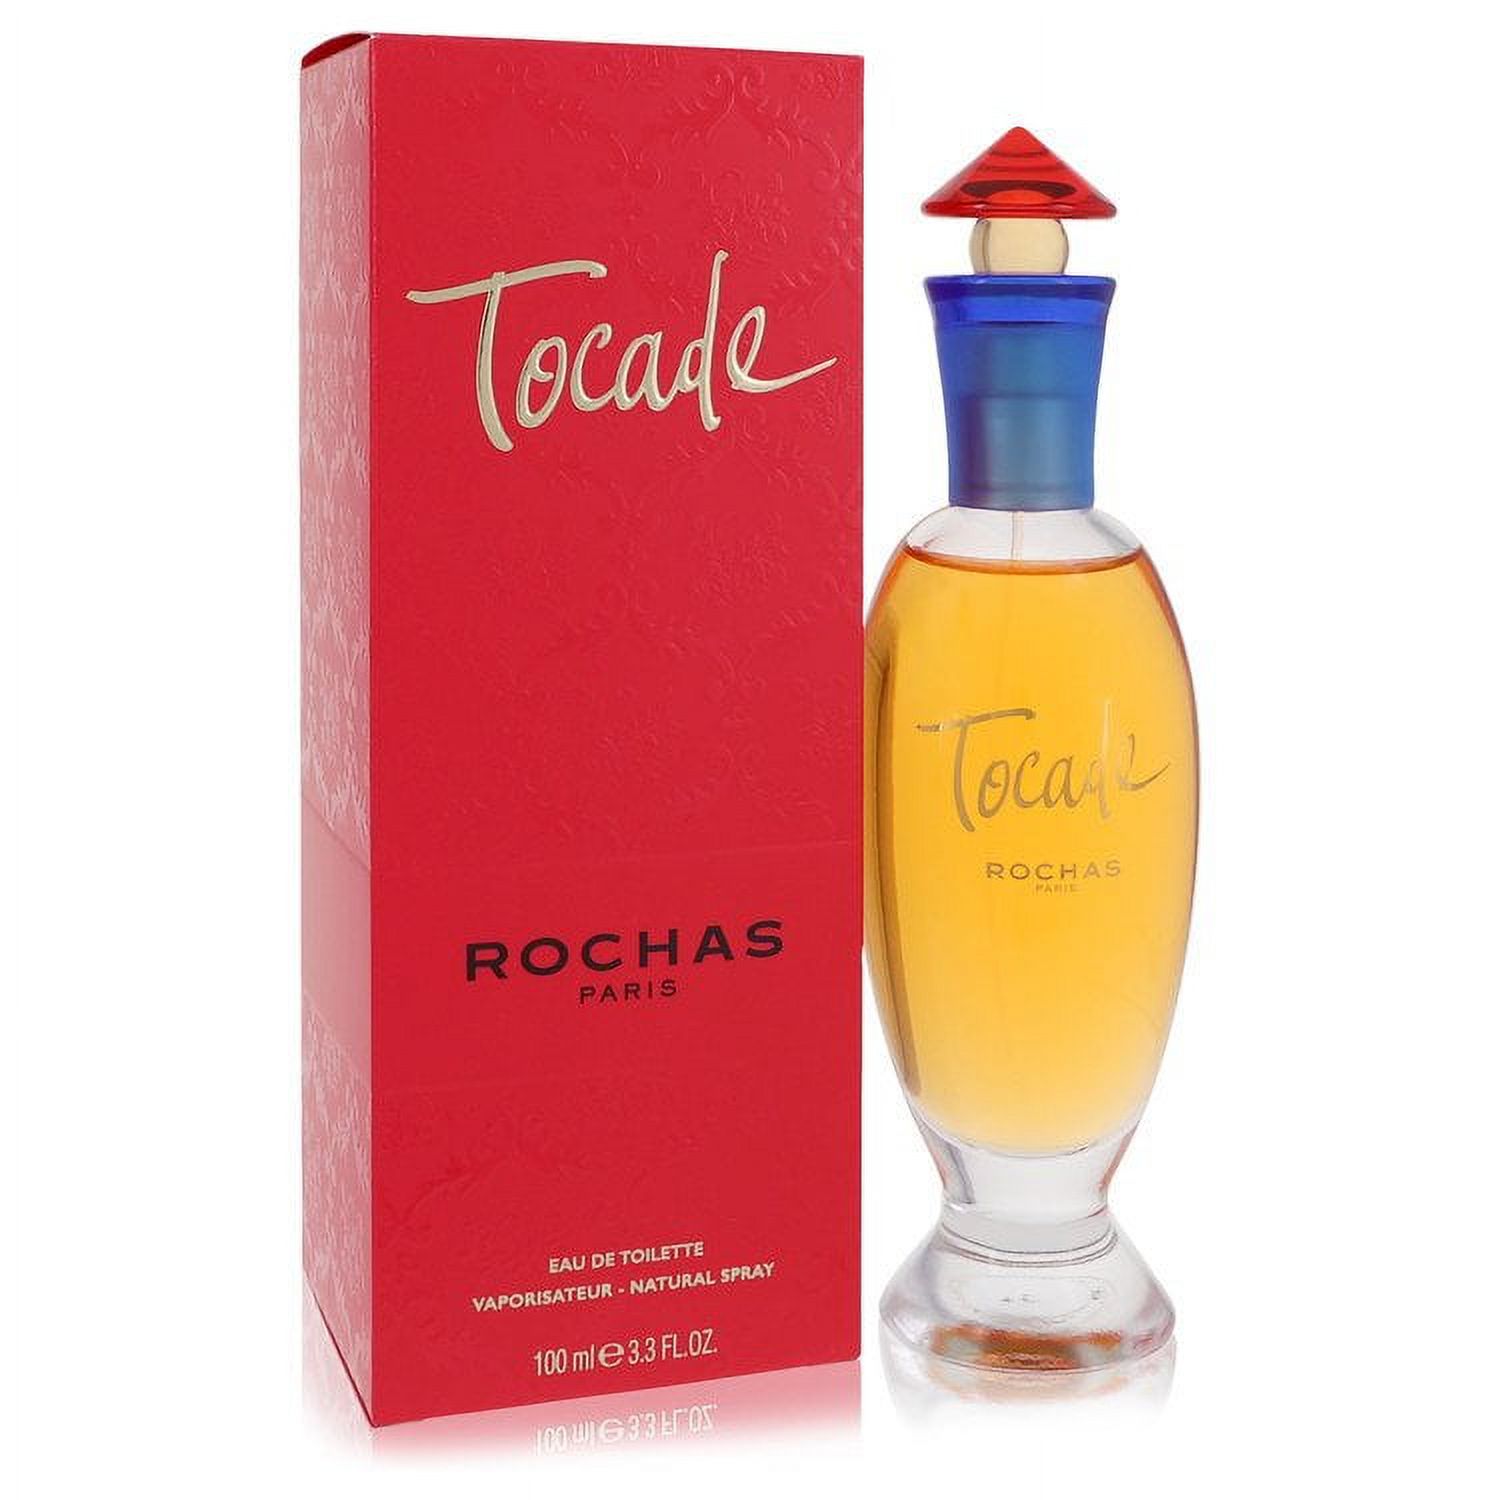 Tocade by Rochas Eau De Toilette Perfume Spray 3.4 oz for Female - image 1 of 2